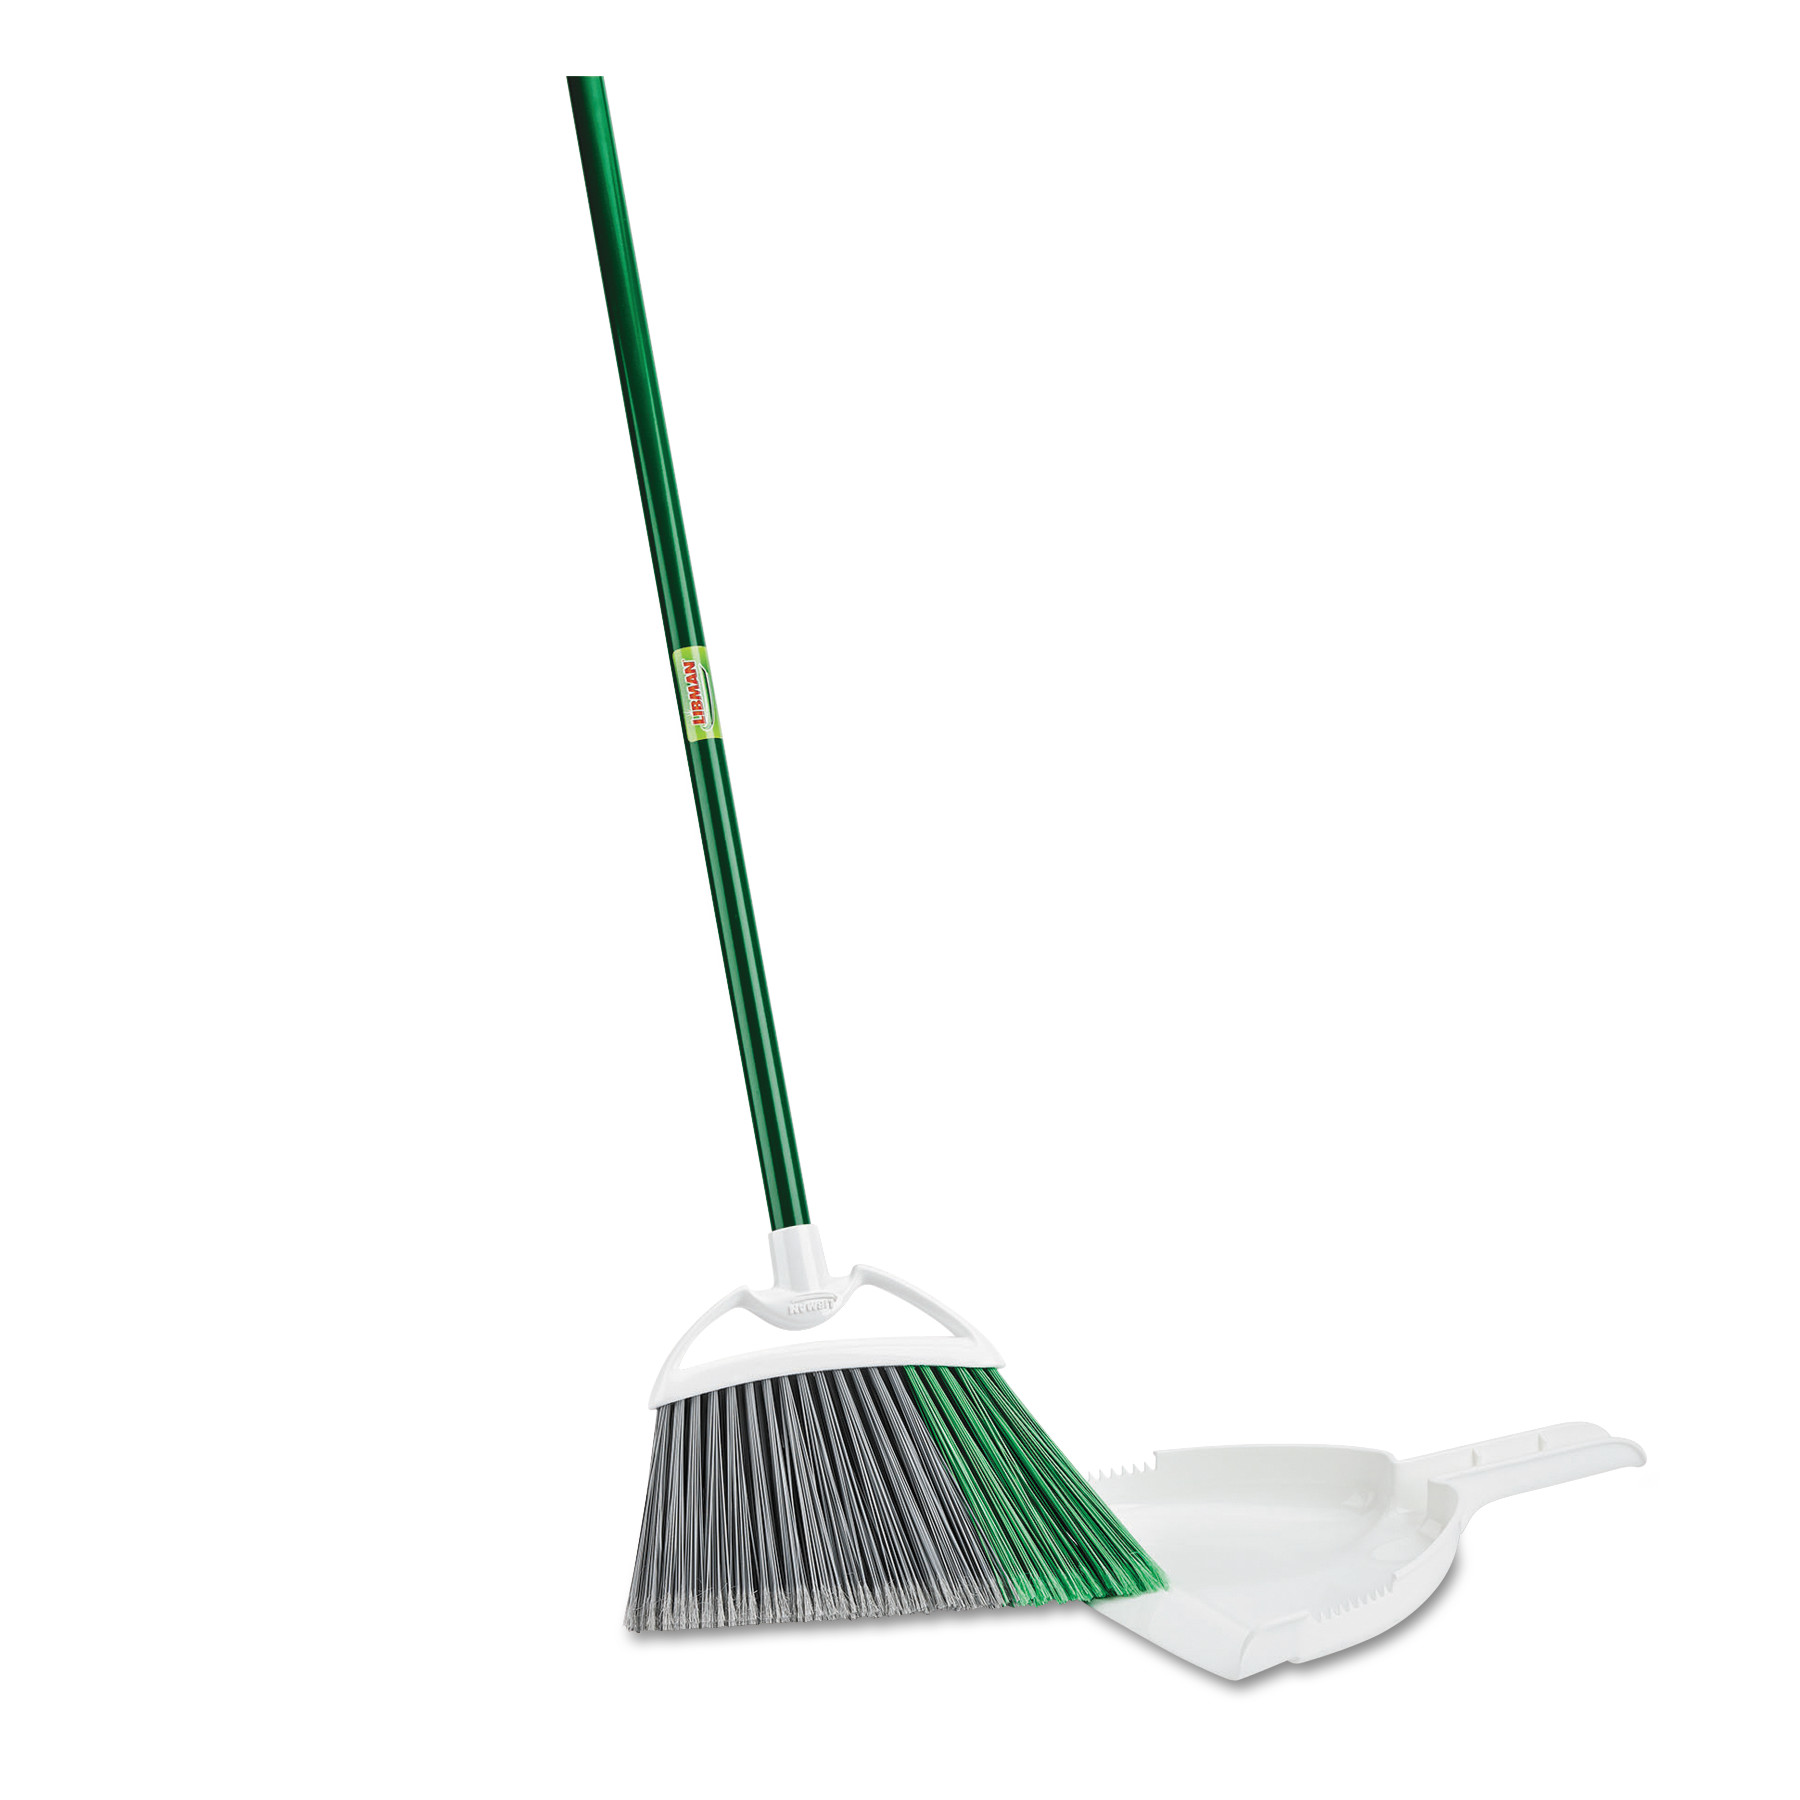  Libman Commercial LBN 206 Precision Angle Broom with Dustpan, 53 Handle, Green/Gray, 4/Carton (LBN206) 